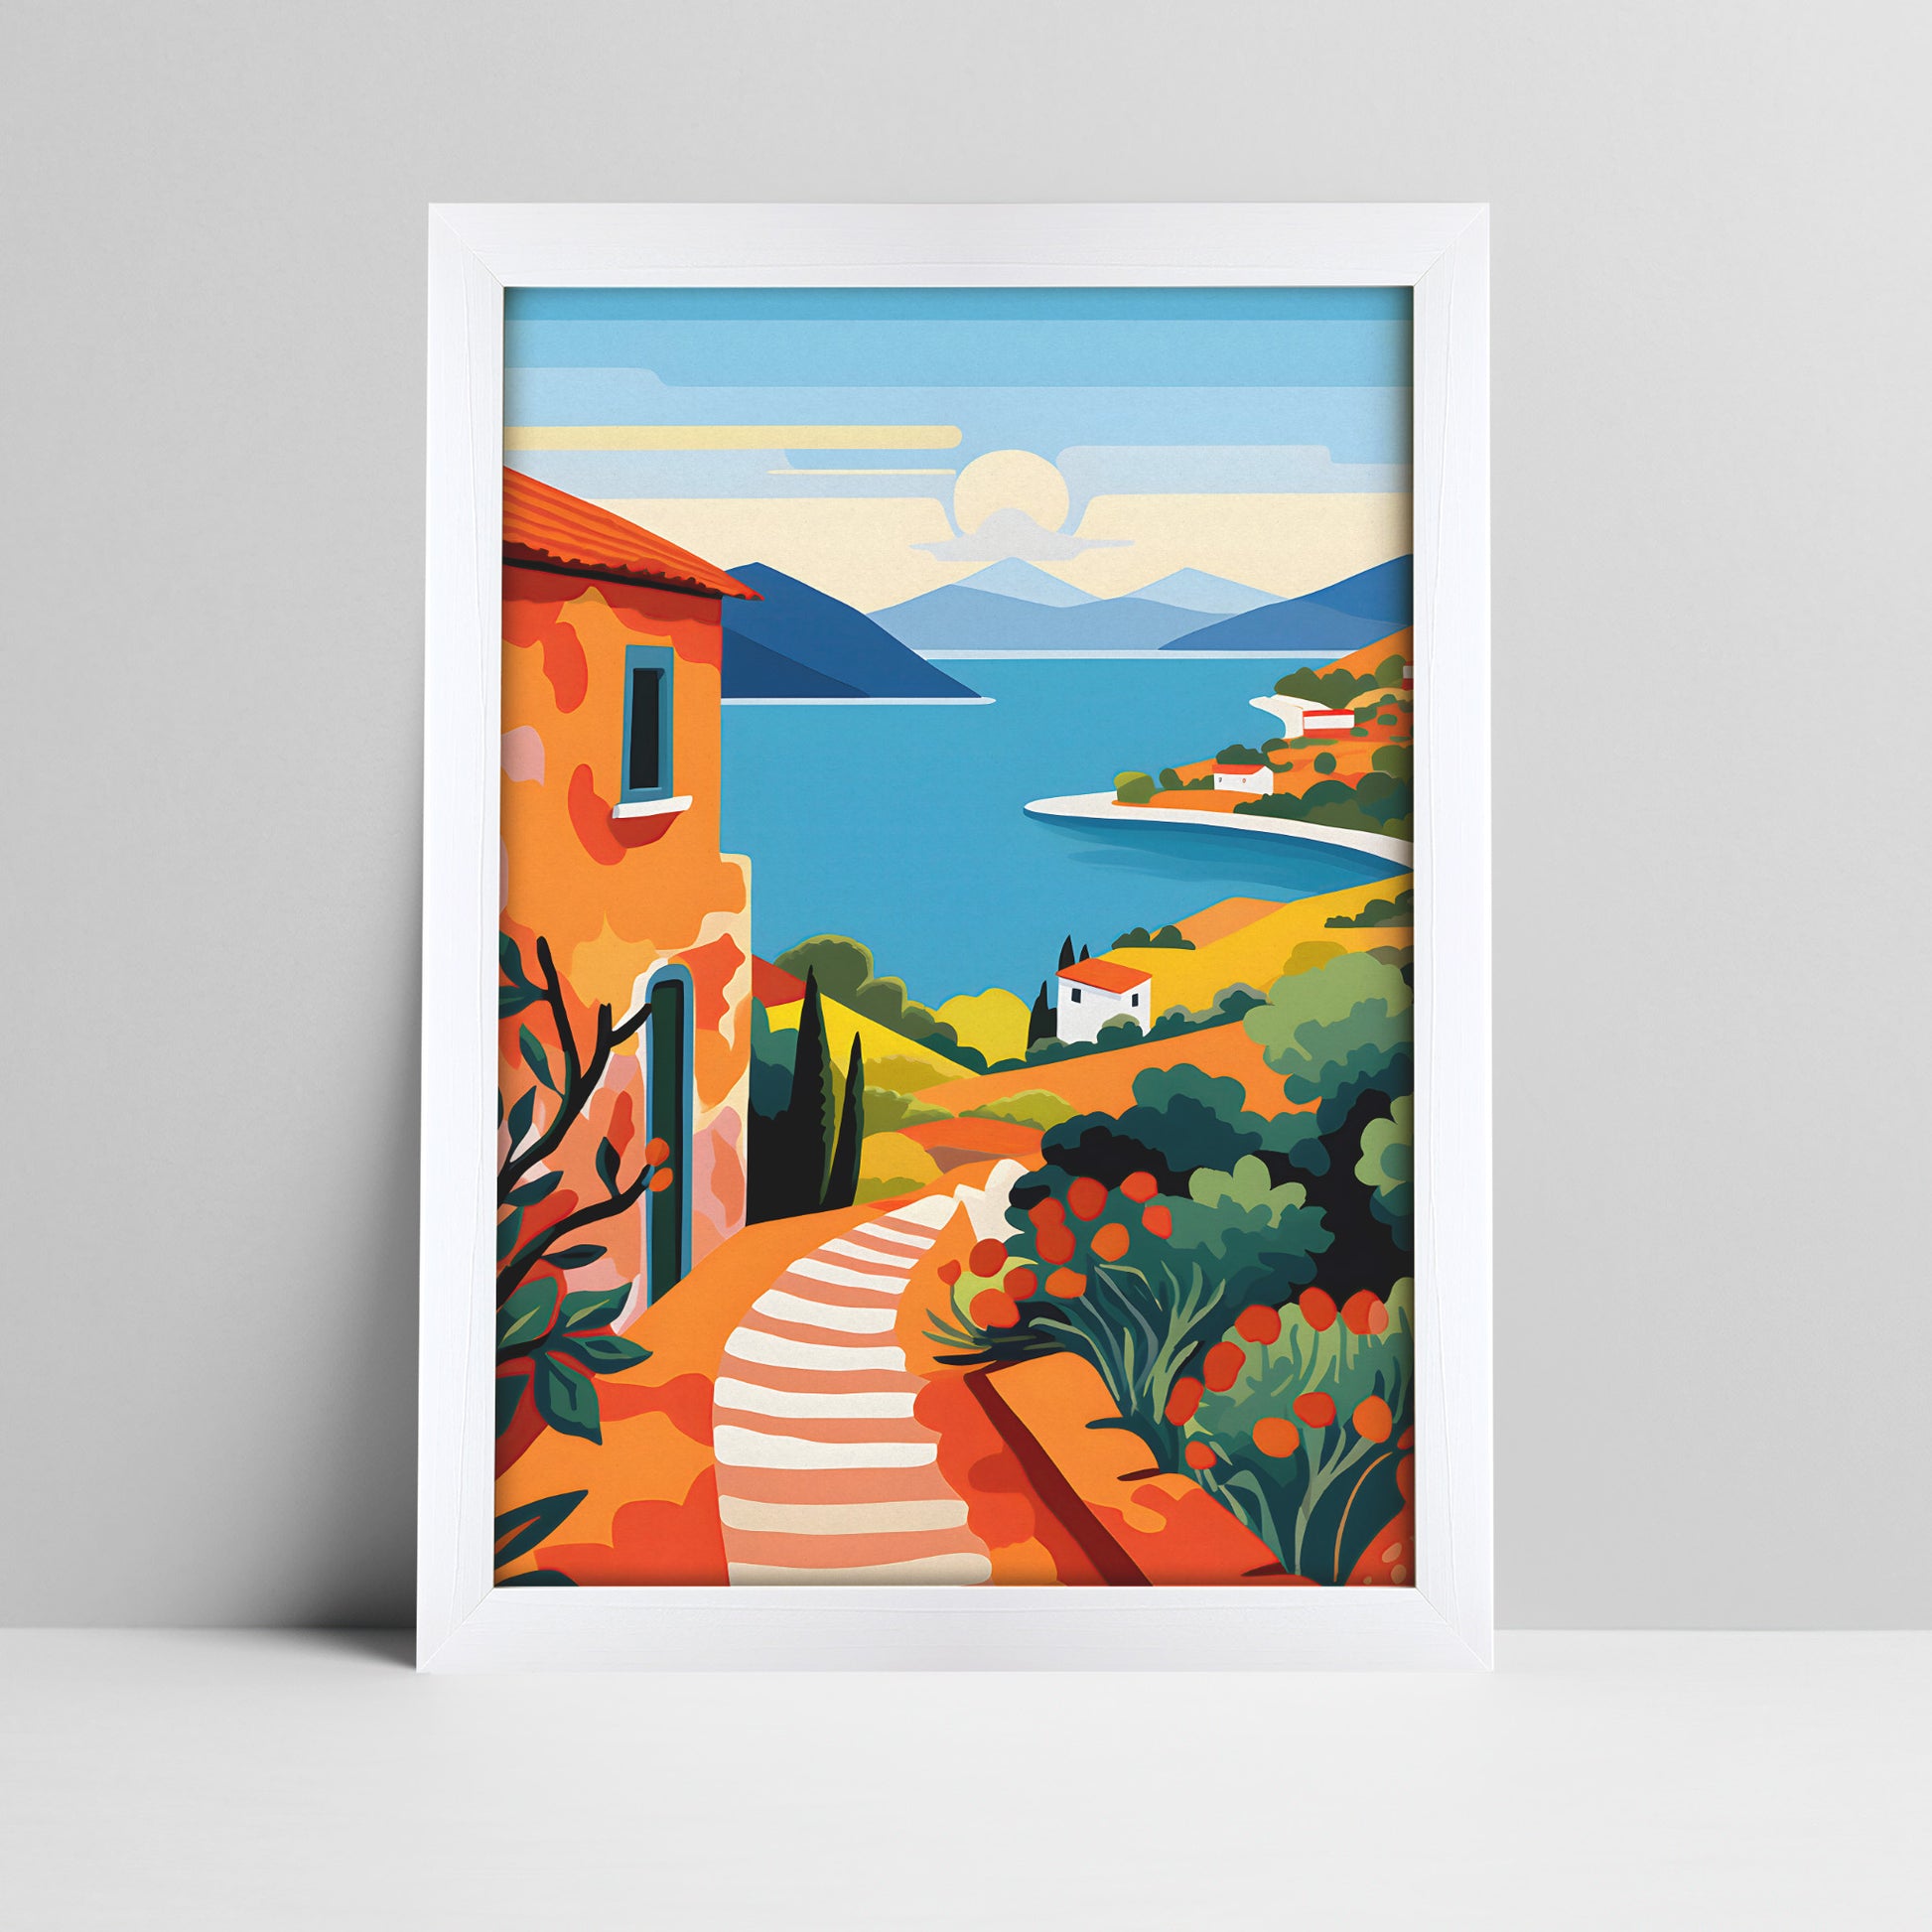 Art print of a mediterranean coastal village landscape illustration in a bold white frame